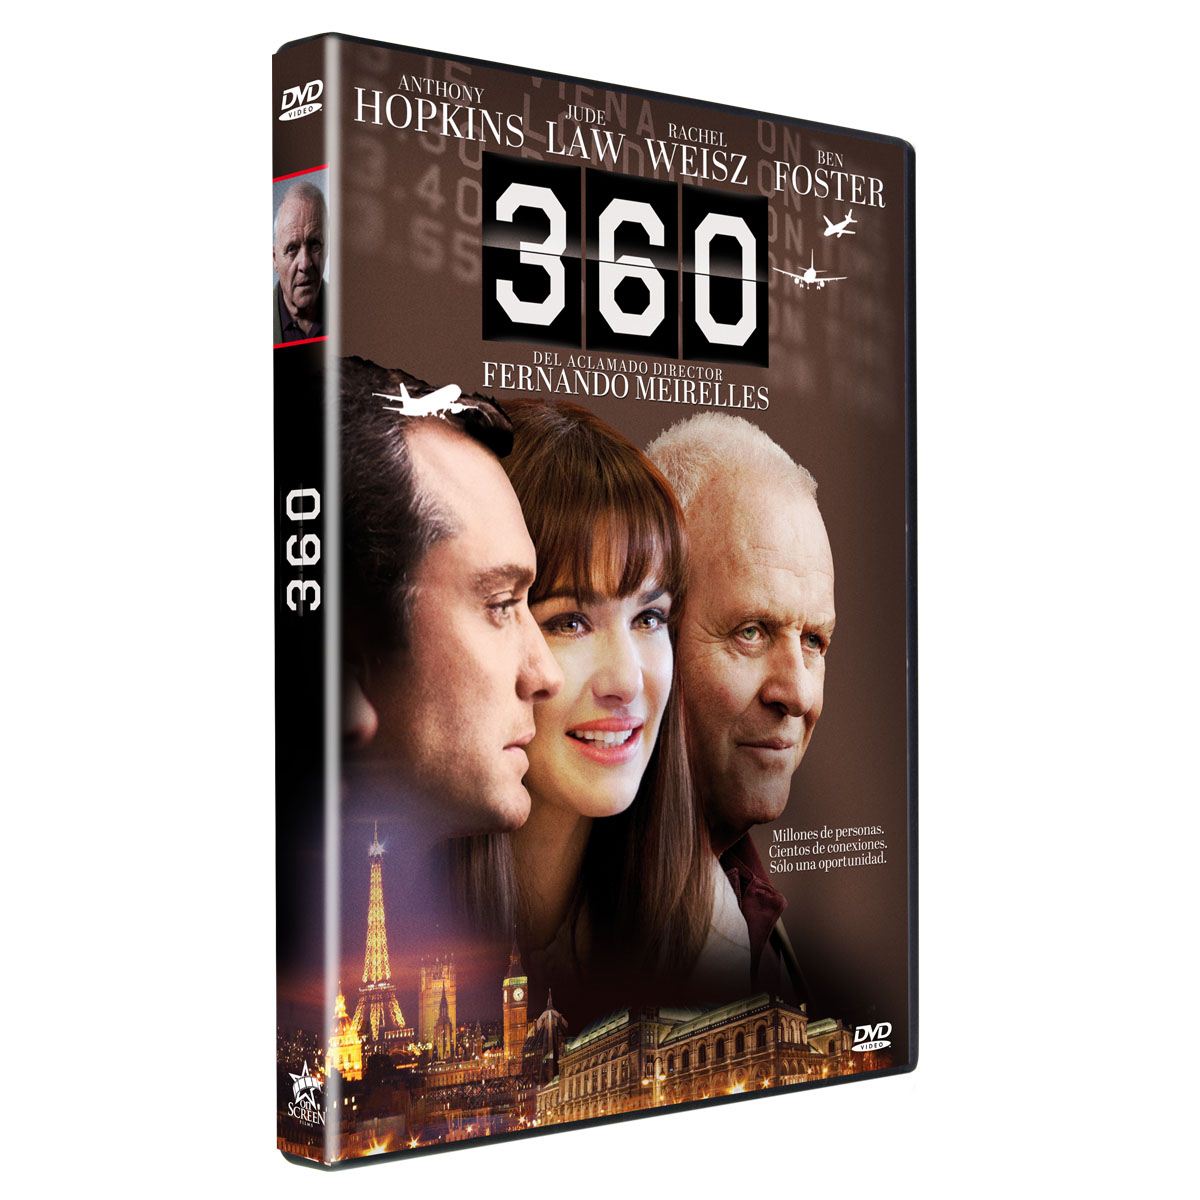 DVD 360